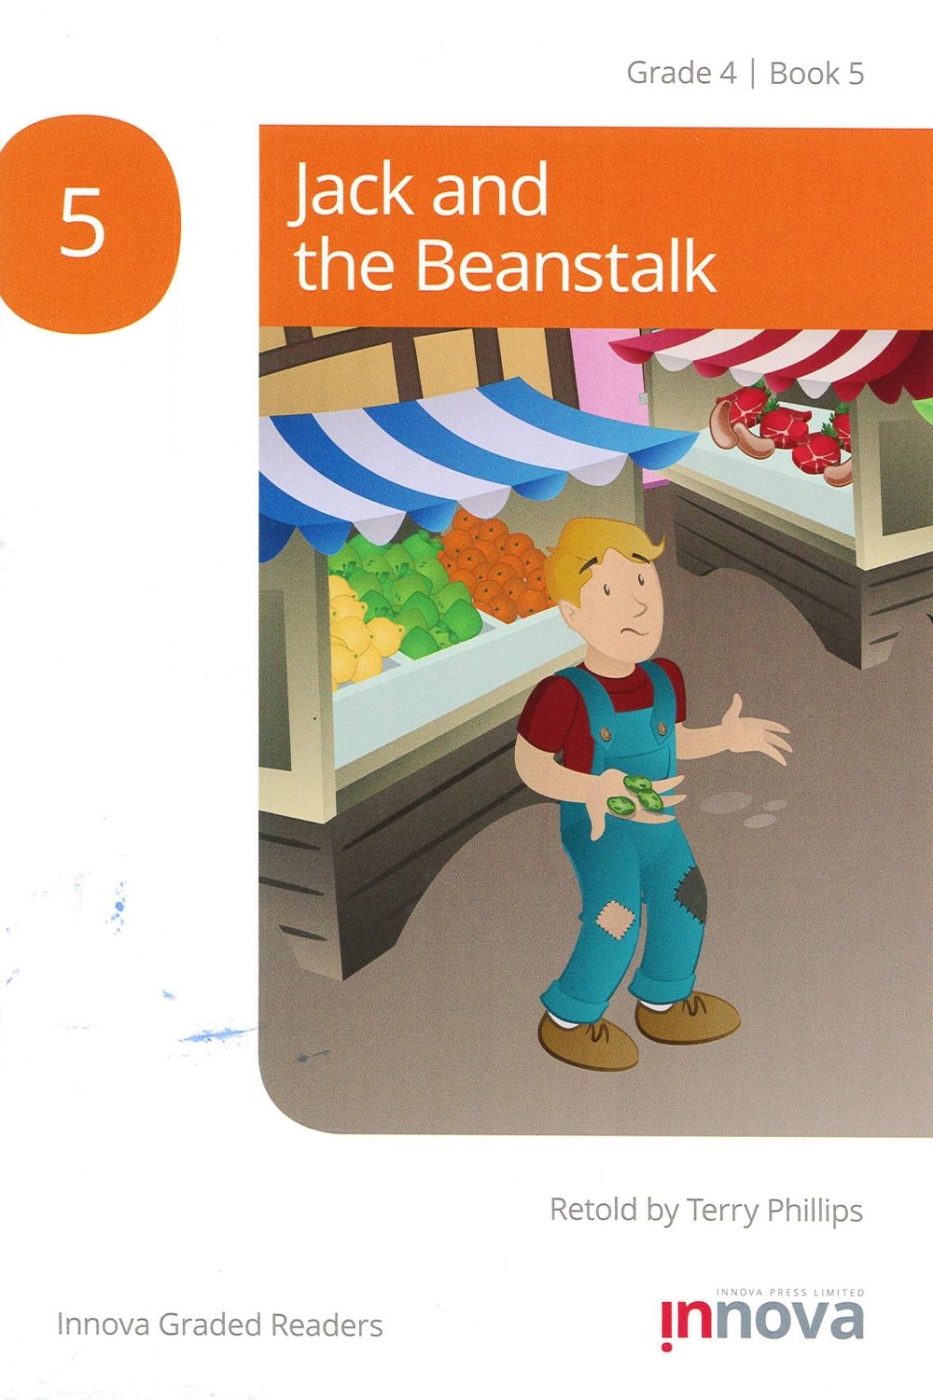 Innova Graded Readers Grade 4 (Book 5) :Jack and the Beanstalk